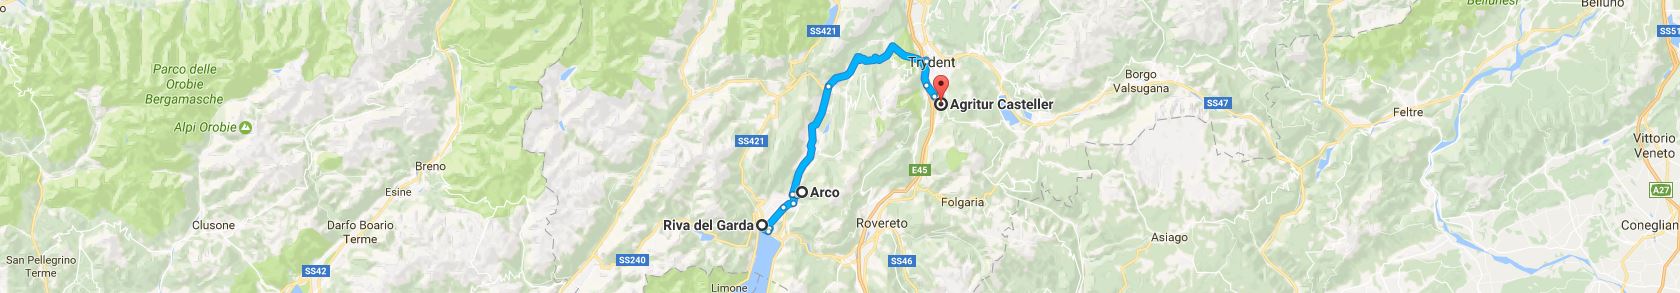 Trasa z Riva del Garda do Trydentu